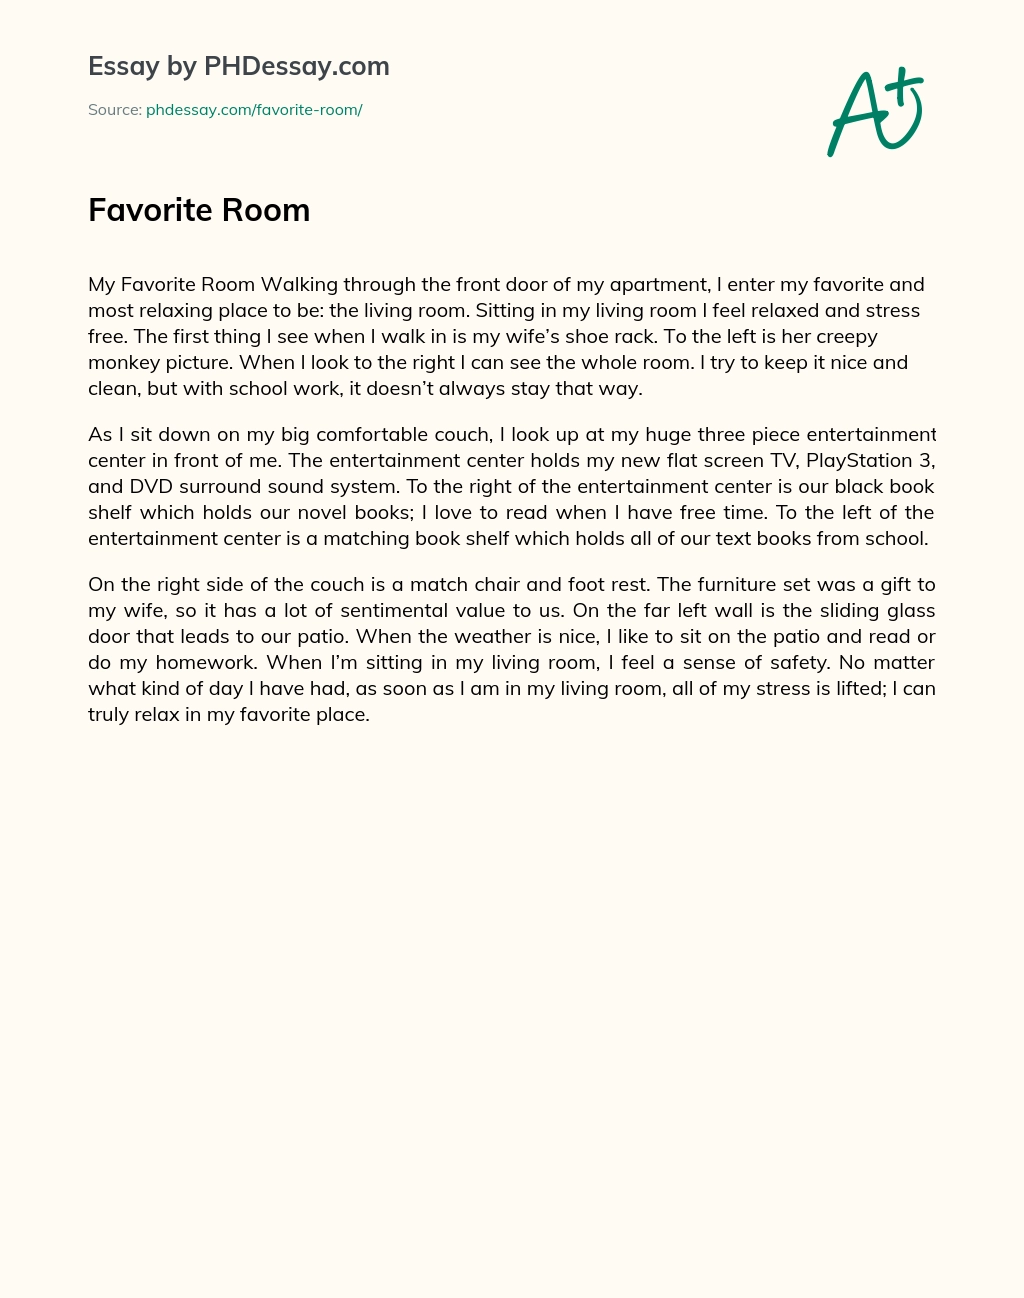 Favorite Room essay